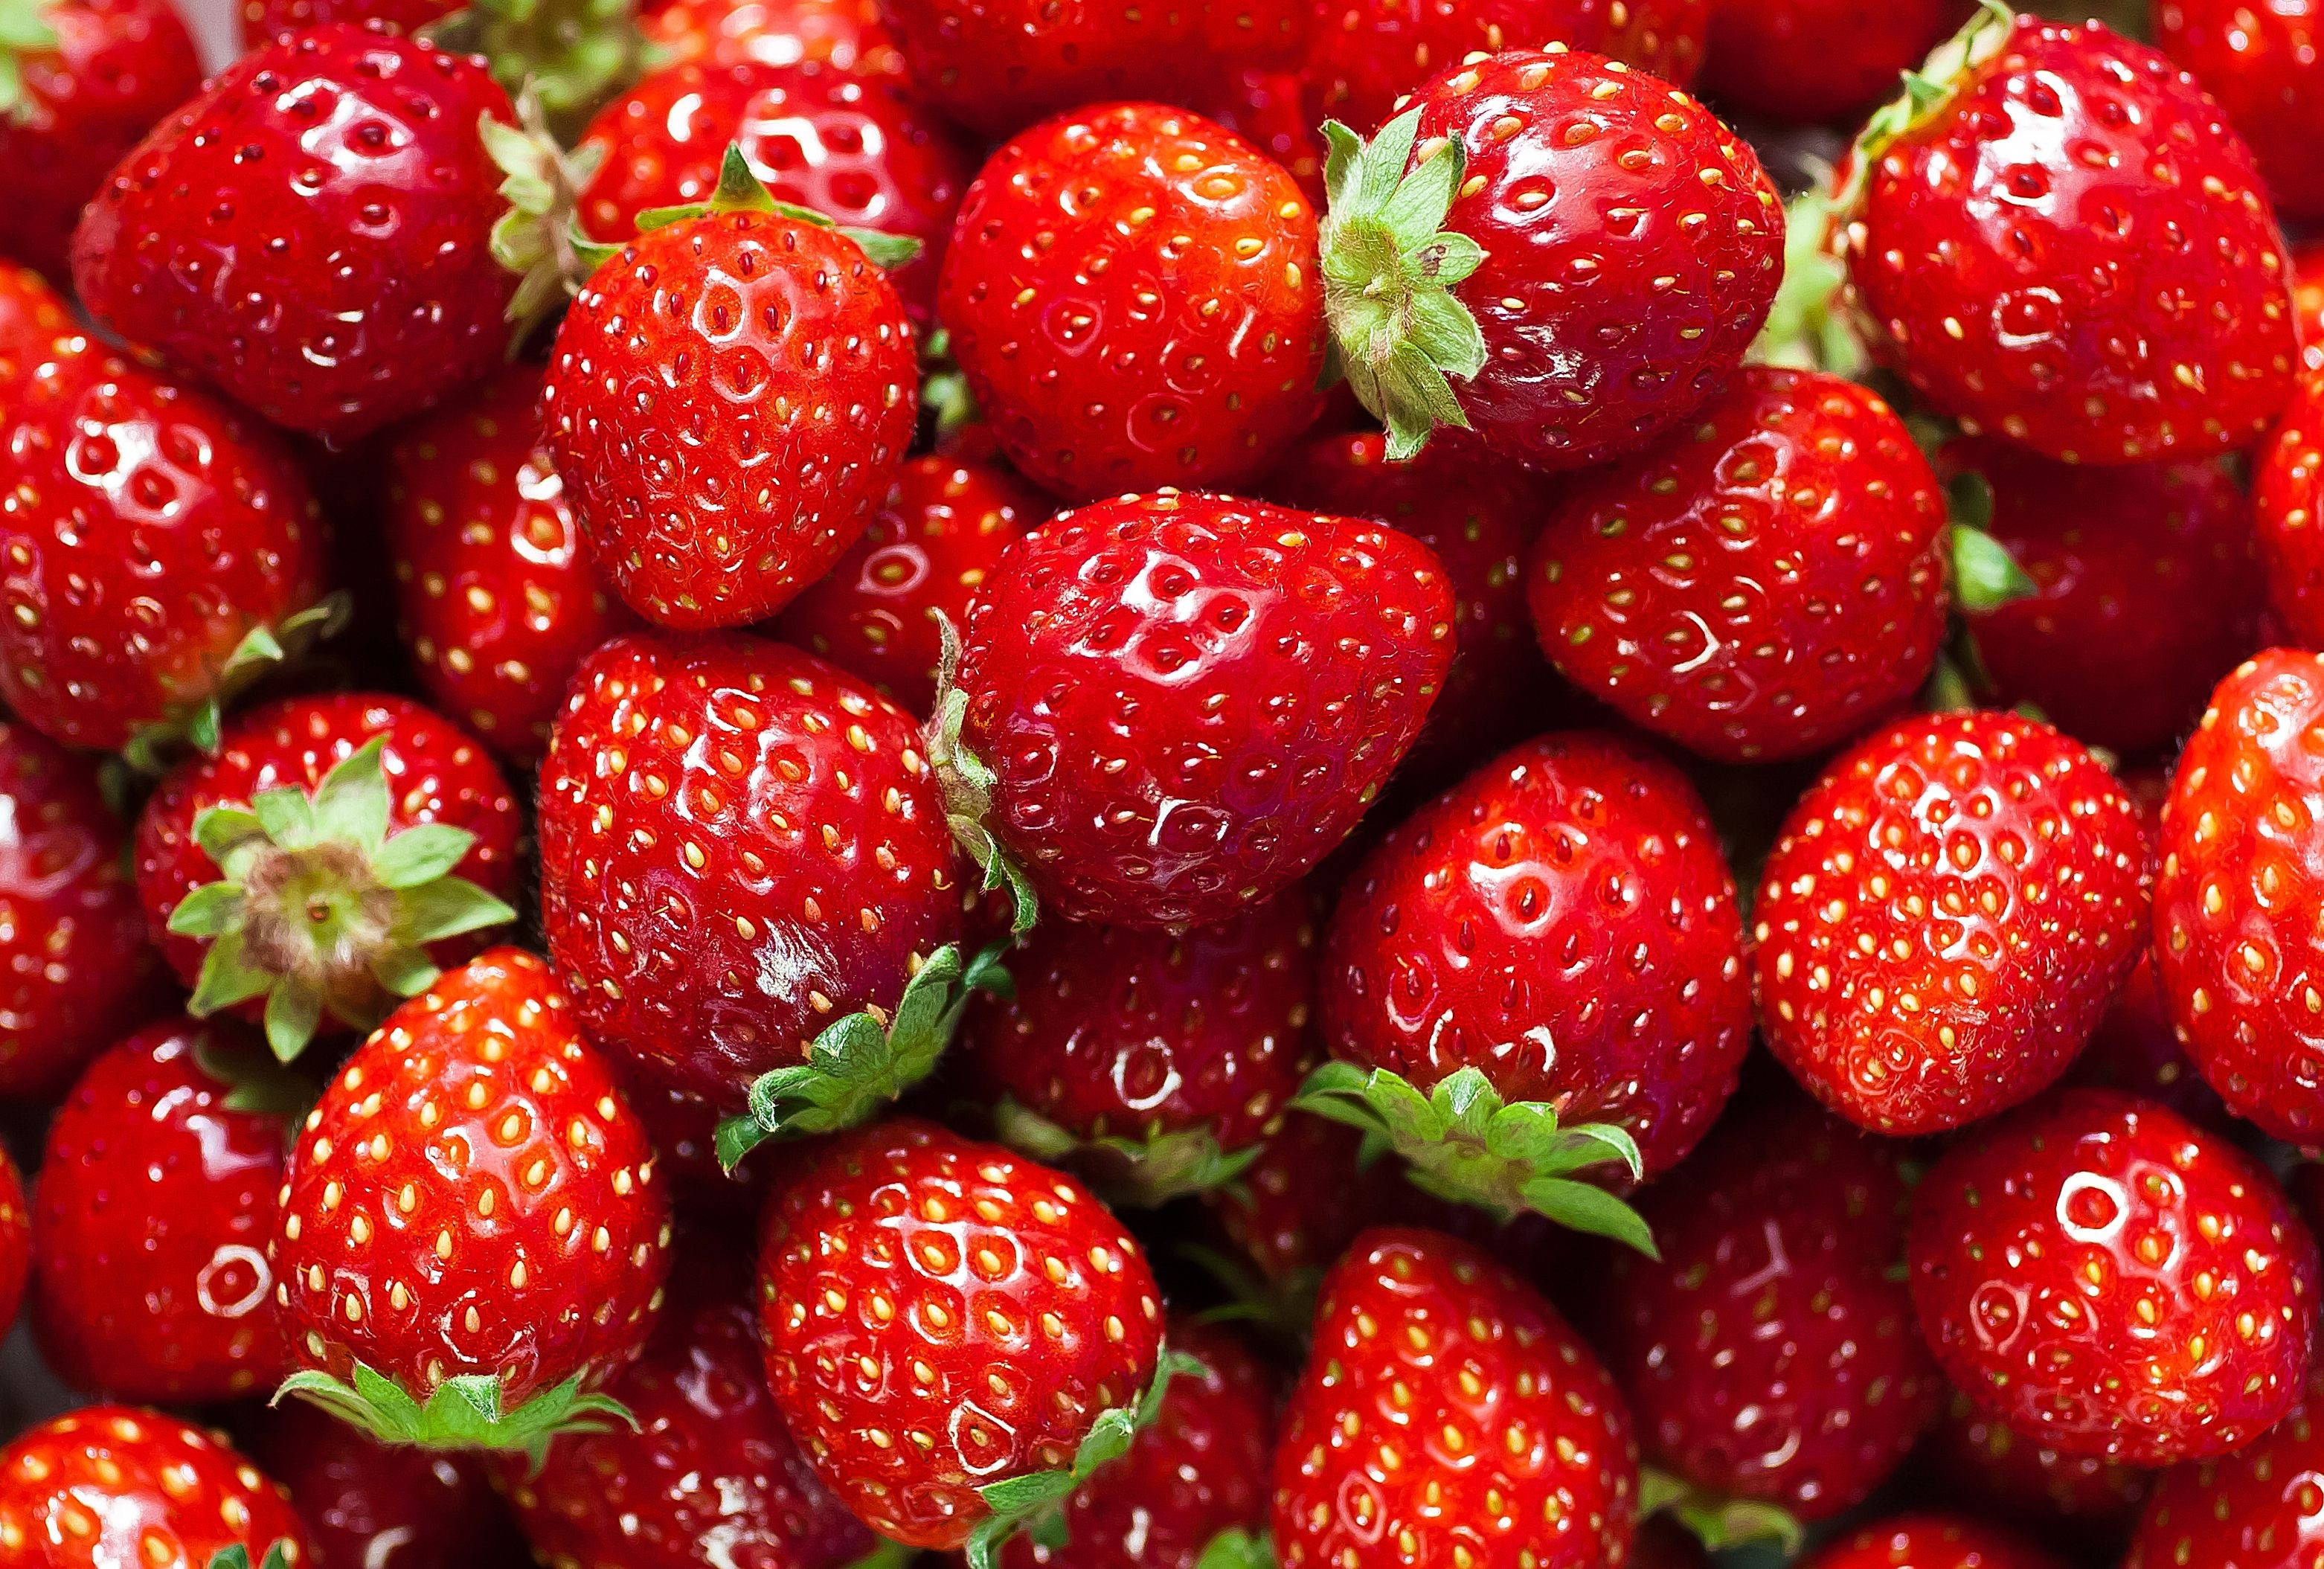 Strawberry 1 kg